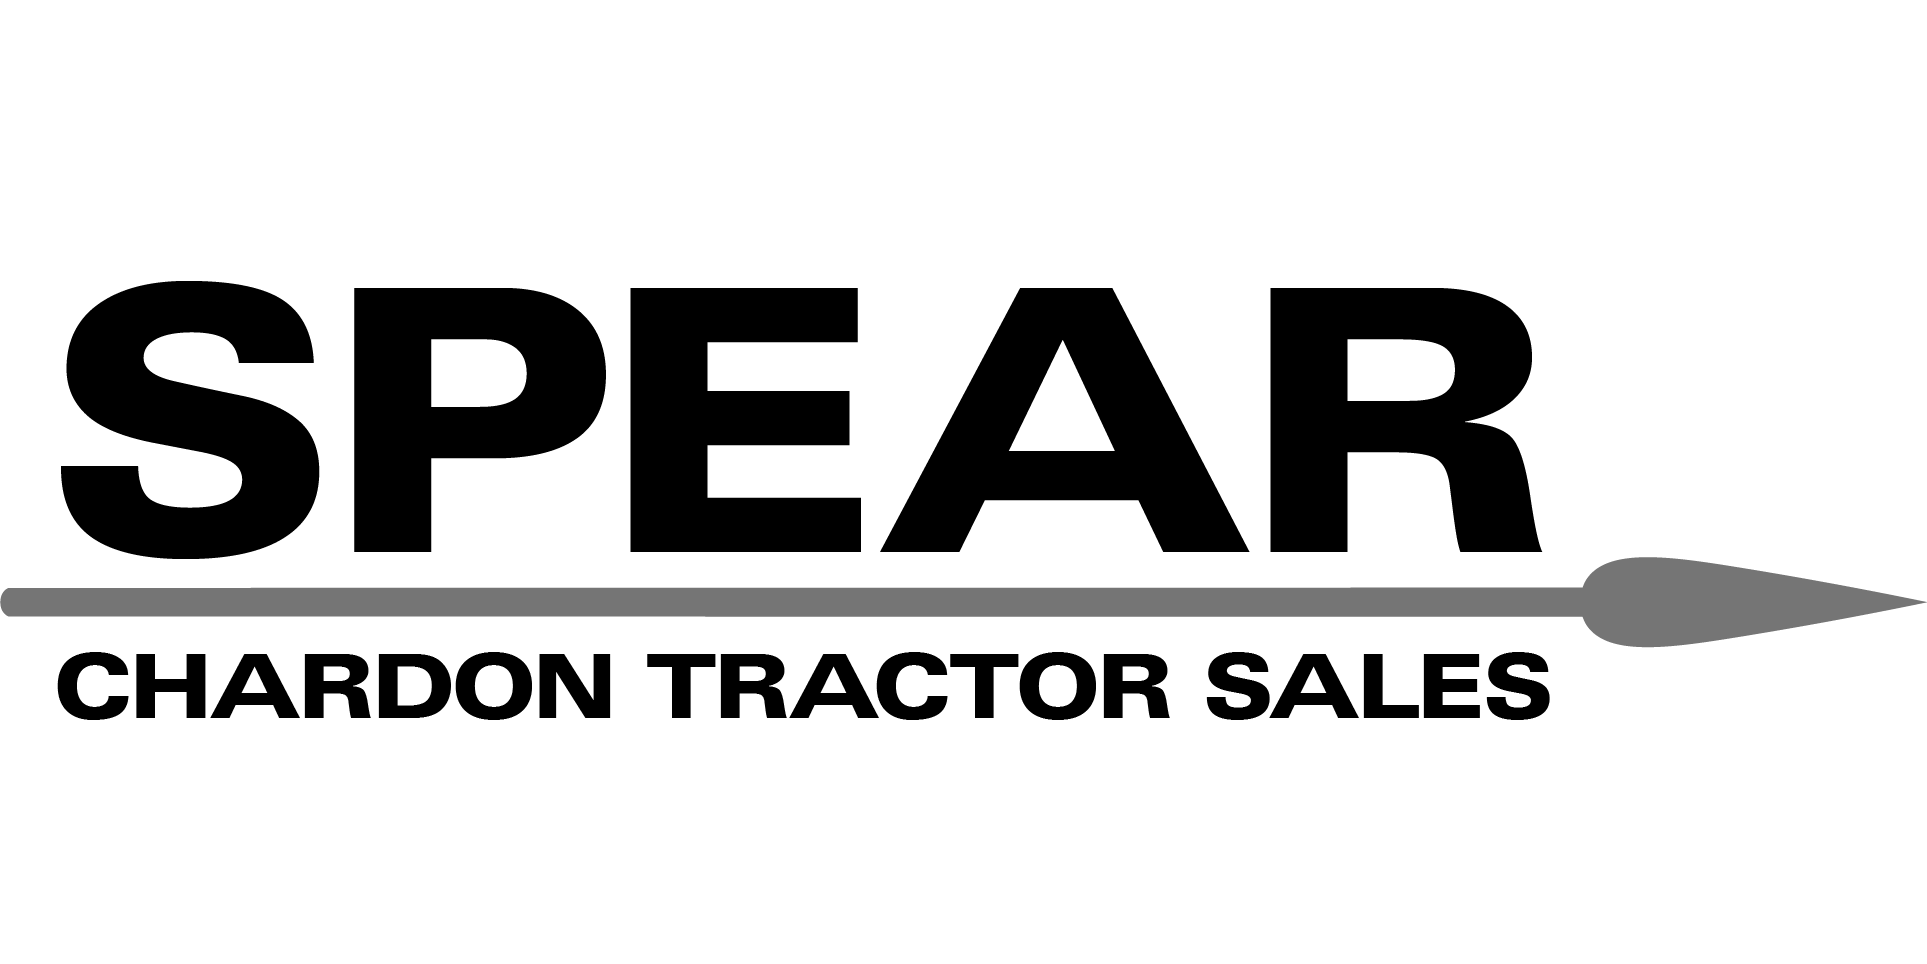 Chardon Logo - Spear Chardon Tractor Sales |